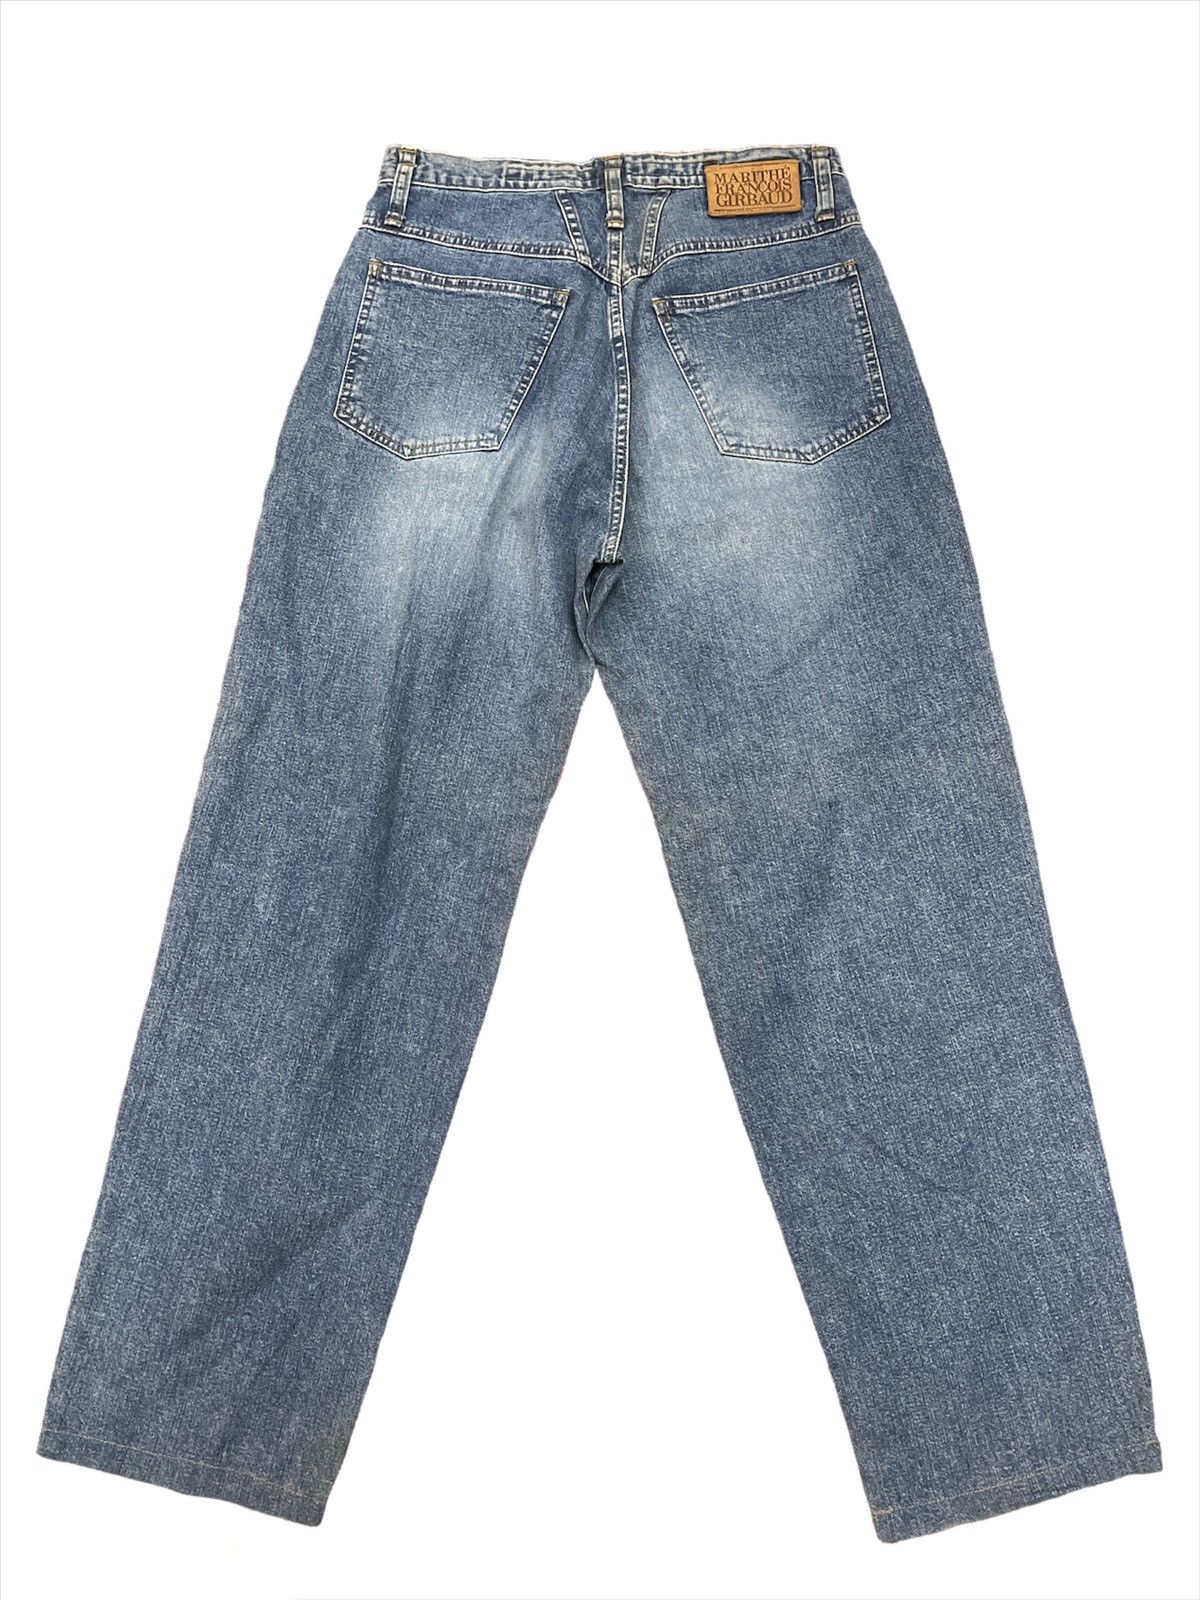 Archival Clothing Le Jean de Marithe Francois Girbaud 90’s Baggy Jeans ...